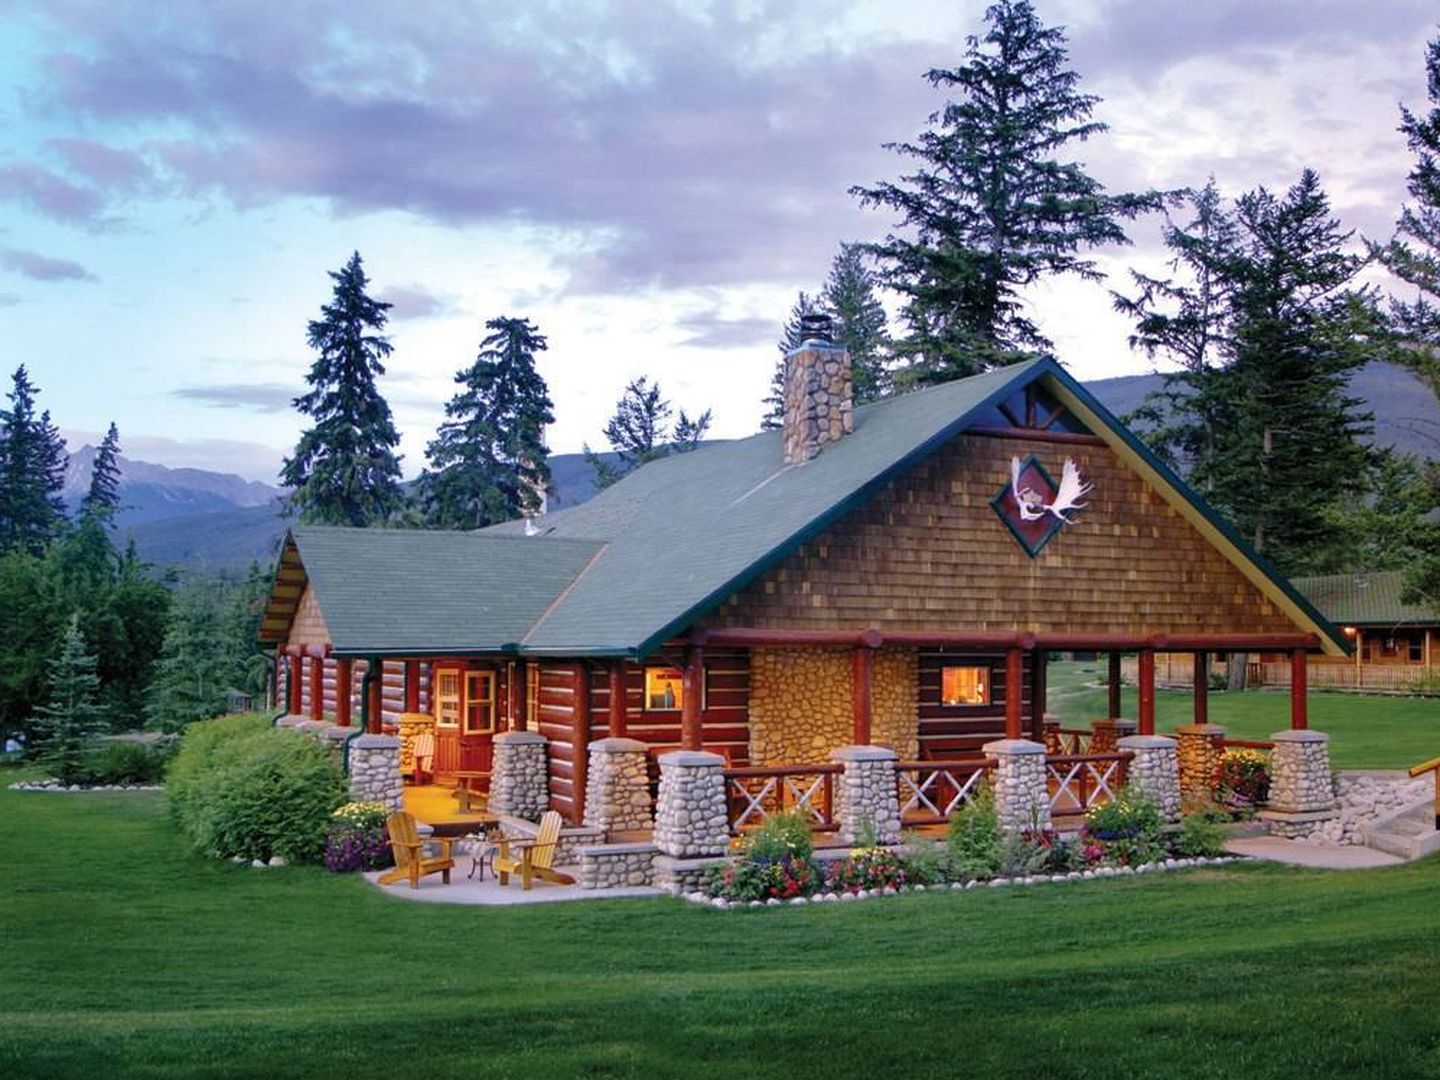 La Cabaña Outlook, conocida como el Retiro Real. (Fairmont Jasper Park Lodge)